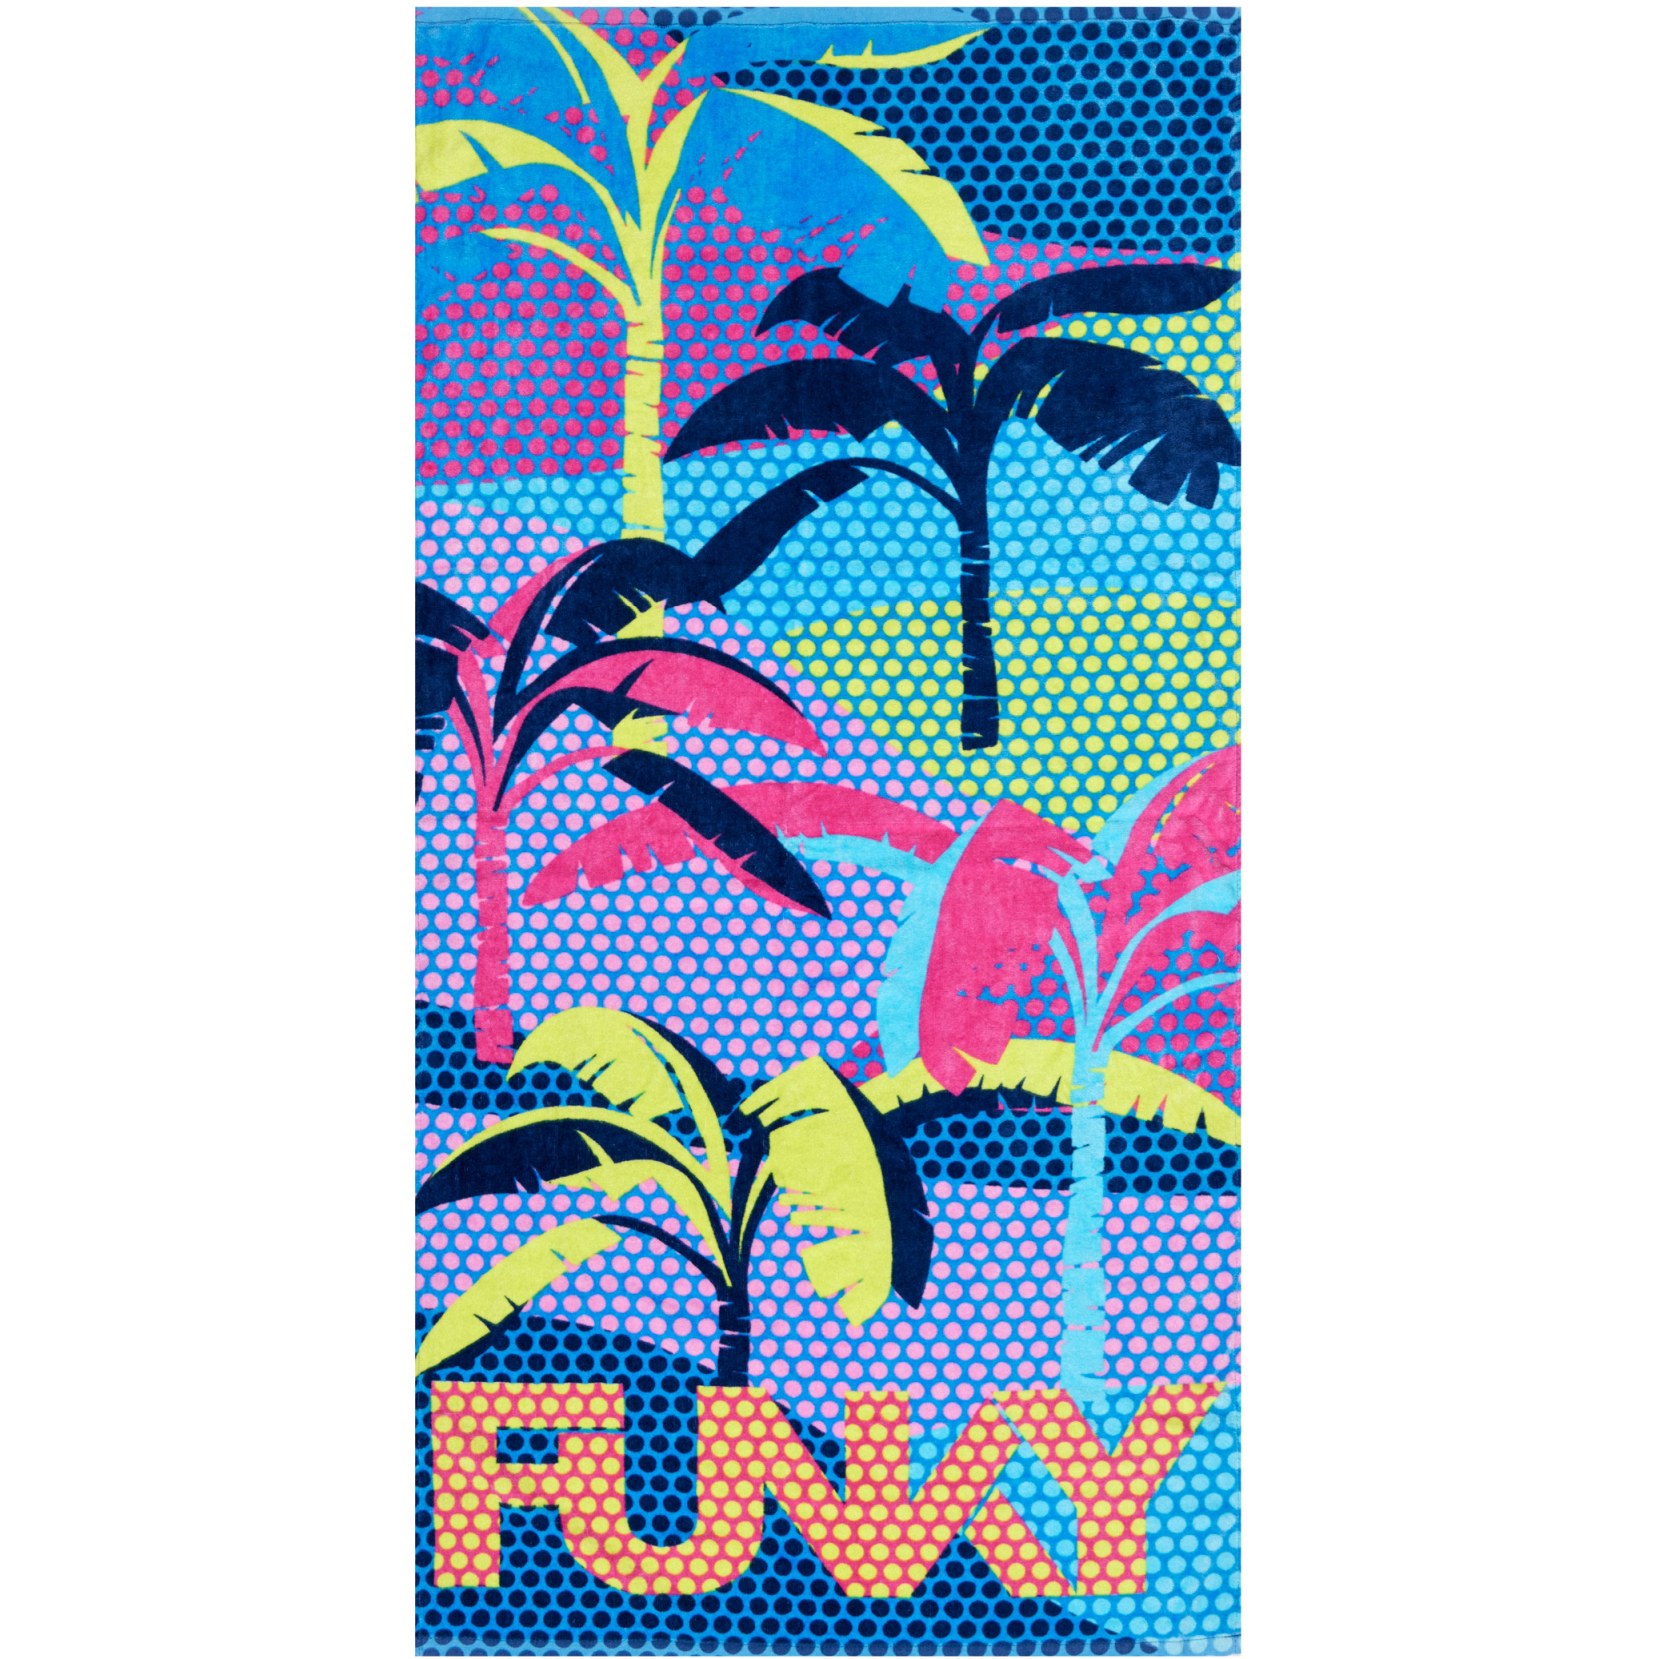 Productfoto van Funky Trunks Katoen Handdoek - Palm A Lot